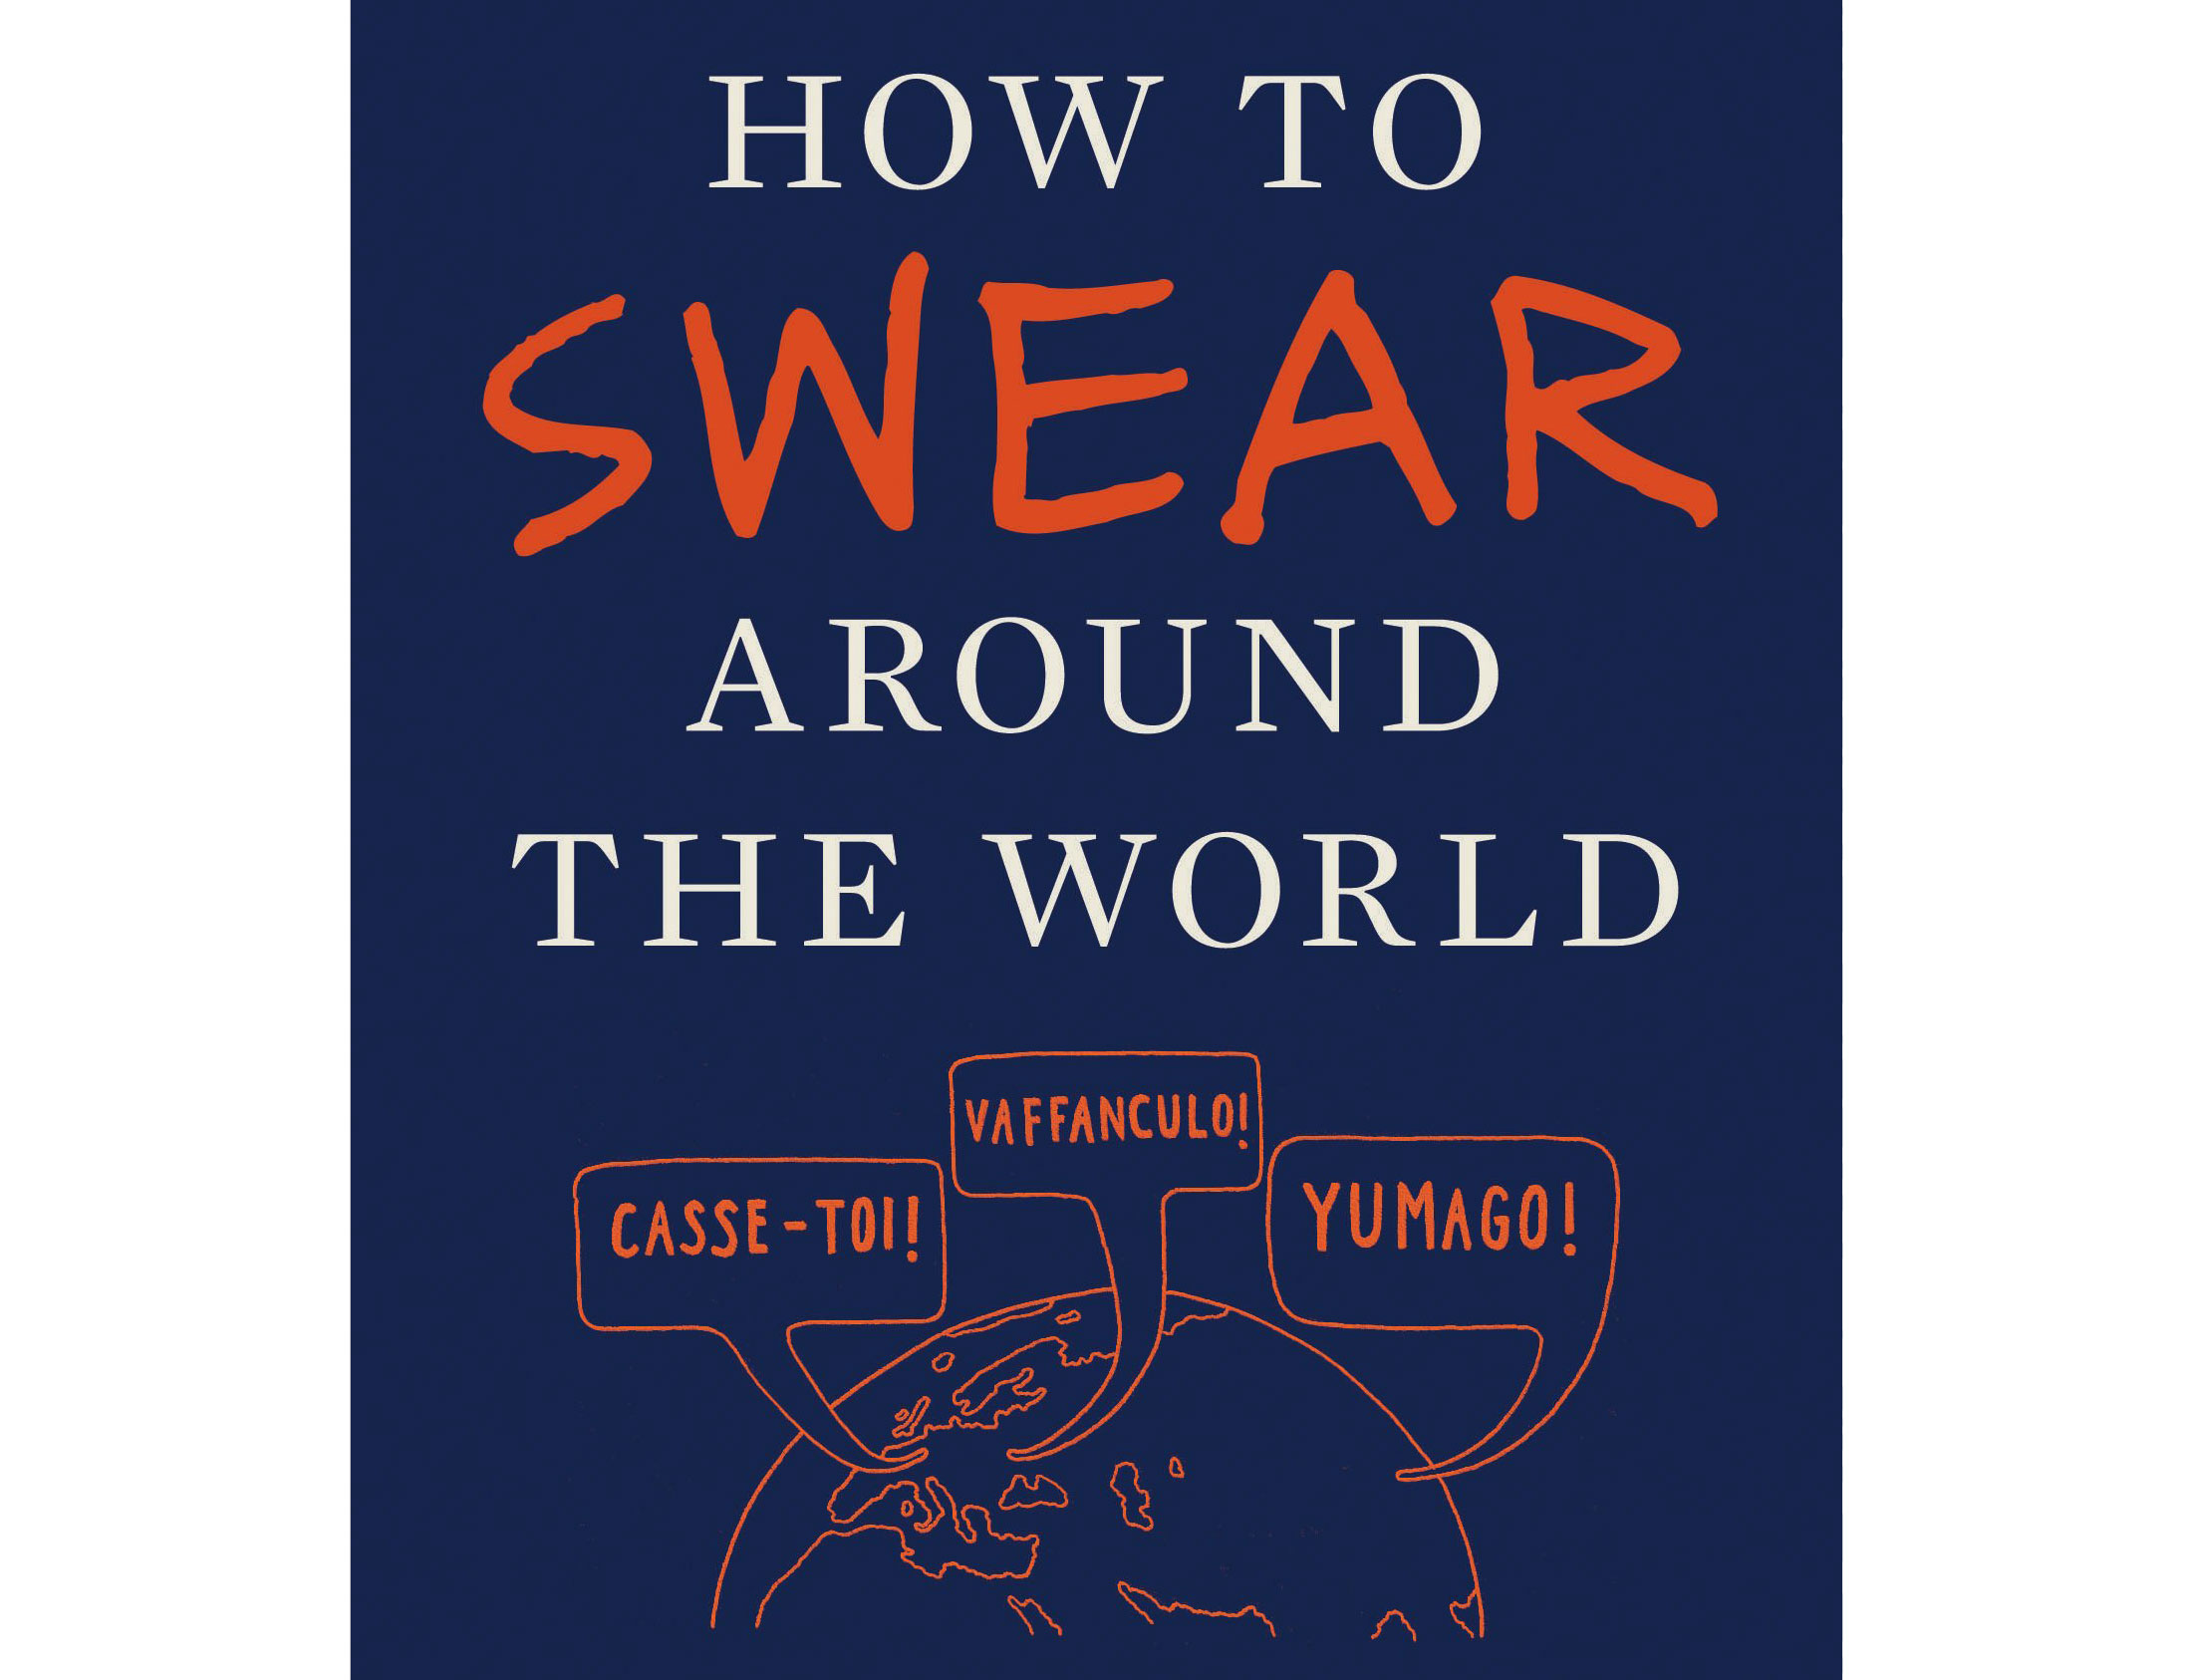 How to Swear Around the World book